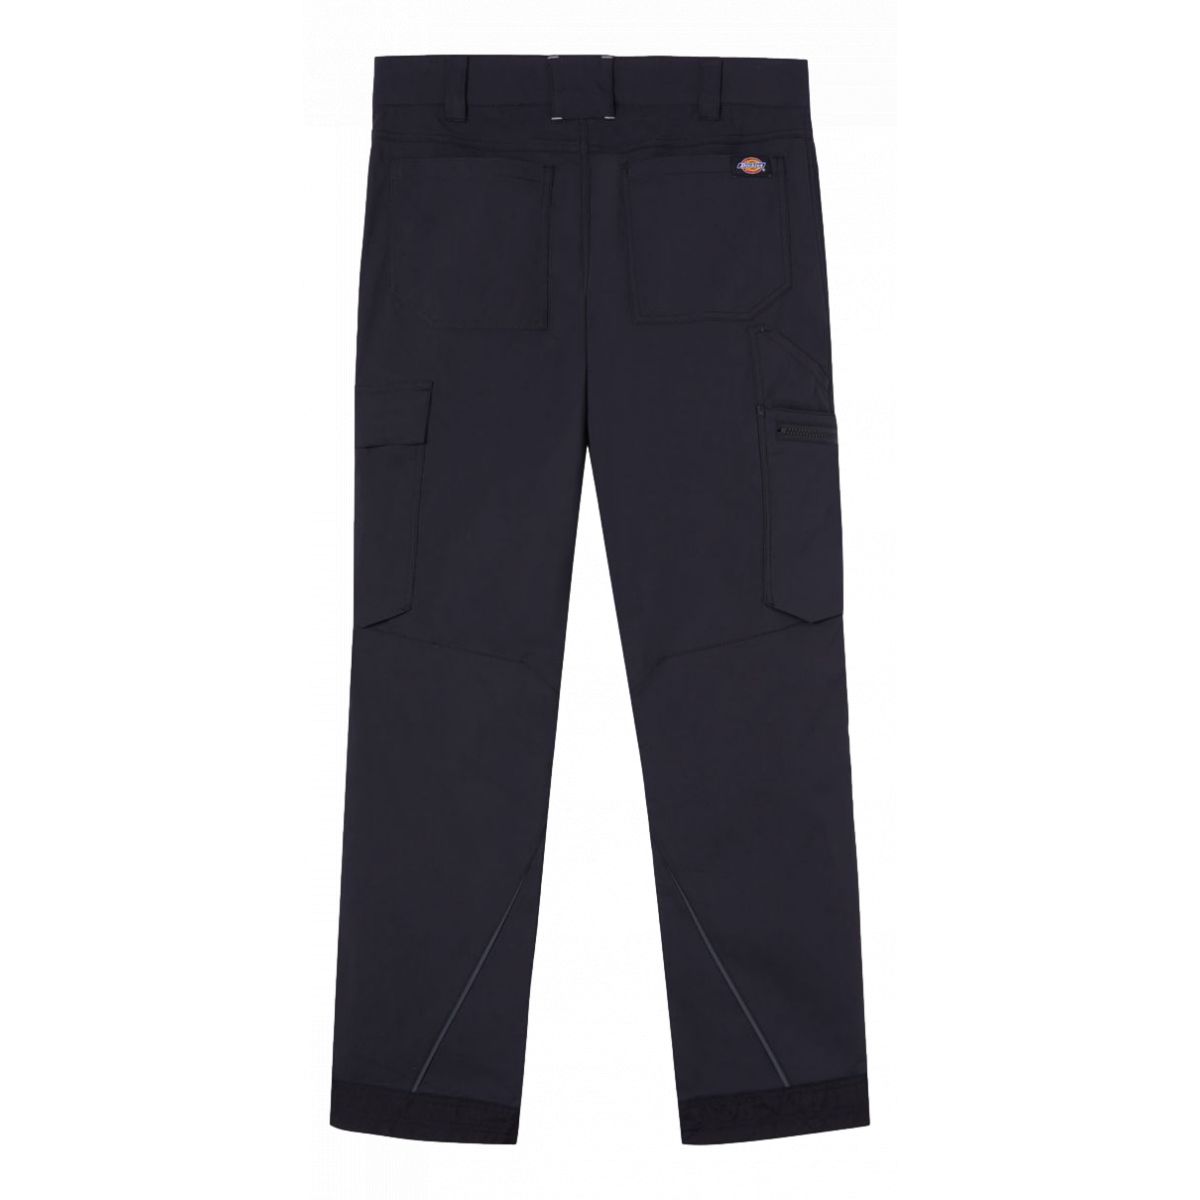 Pantalon léger Flex Noir - Dickies - Taille 44 1